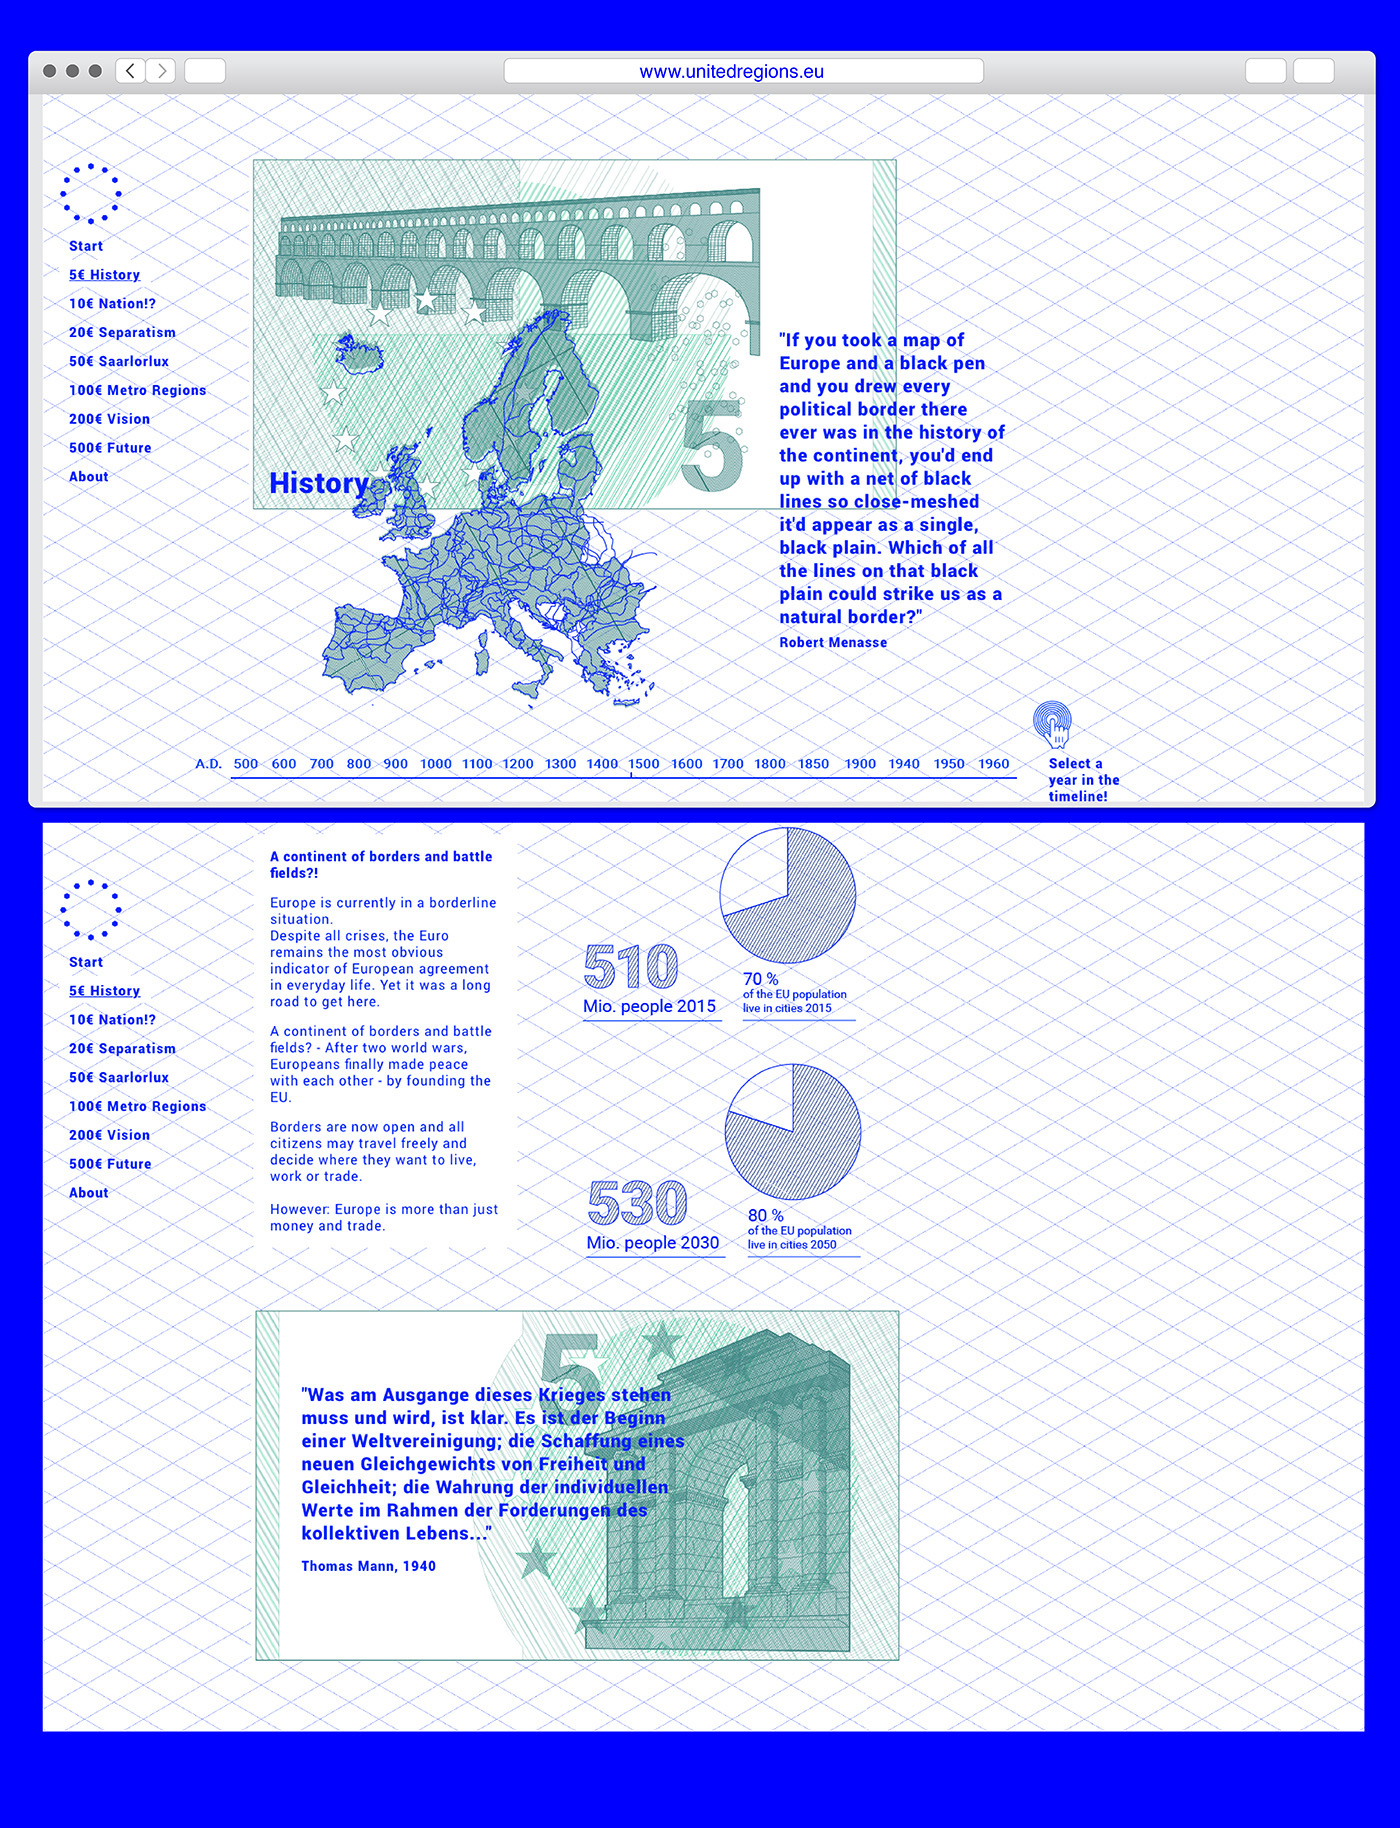 infographic Europe arch+ planetary urbanism United Regions EU vision future